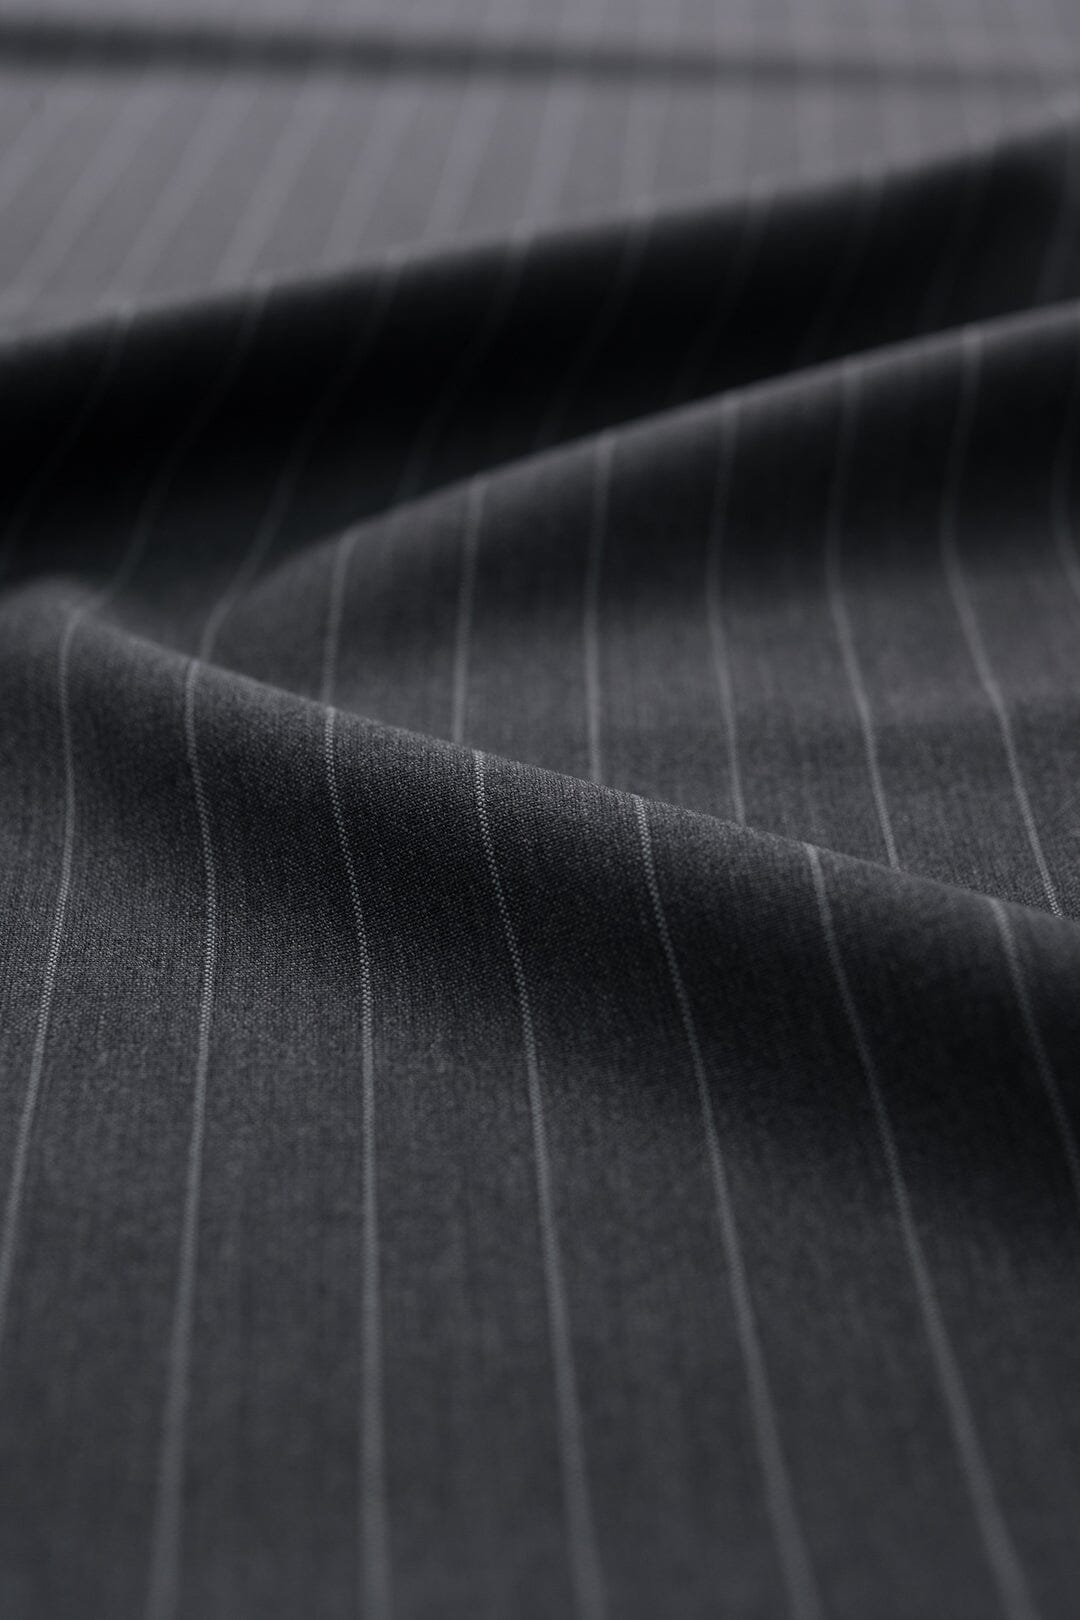 V20519 Gray Stripe 100s Wool Suiting -2.9m VINTAGE Giovanni Valentino